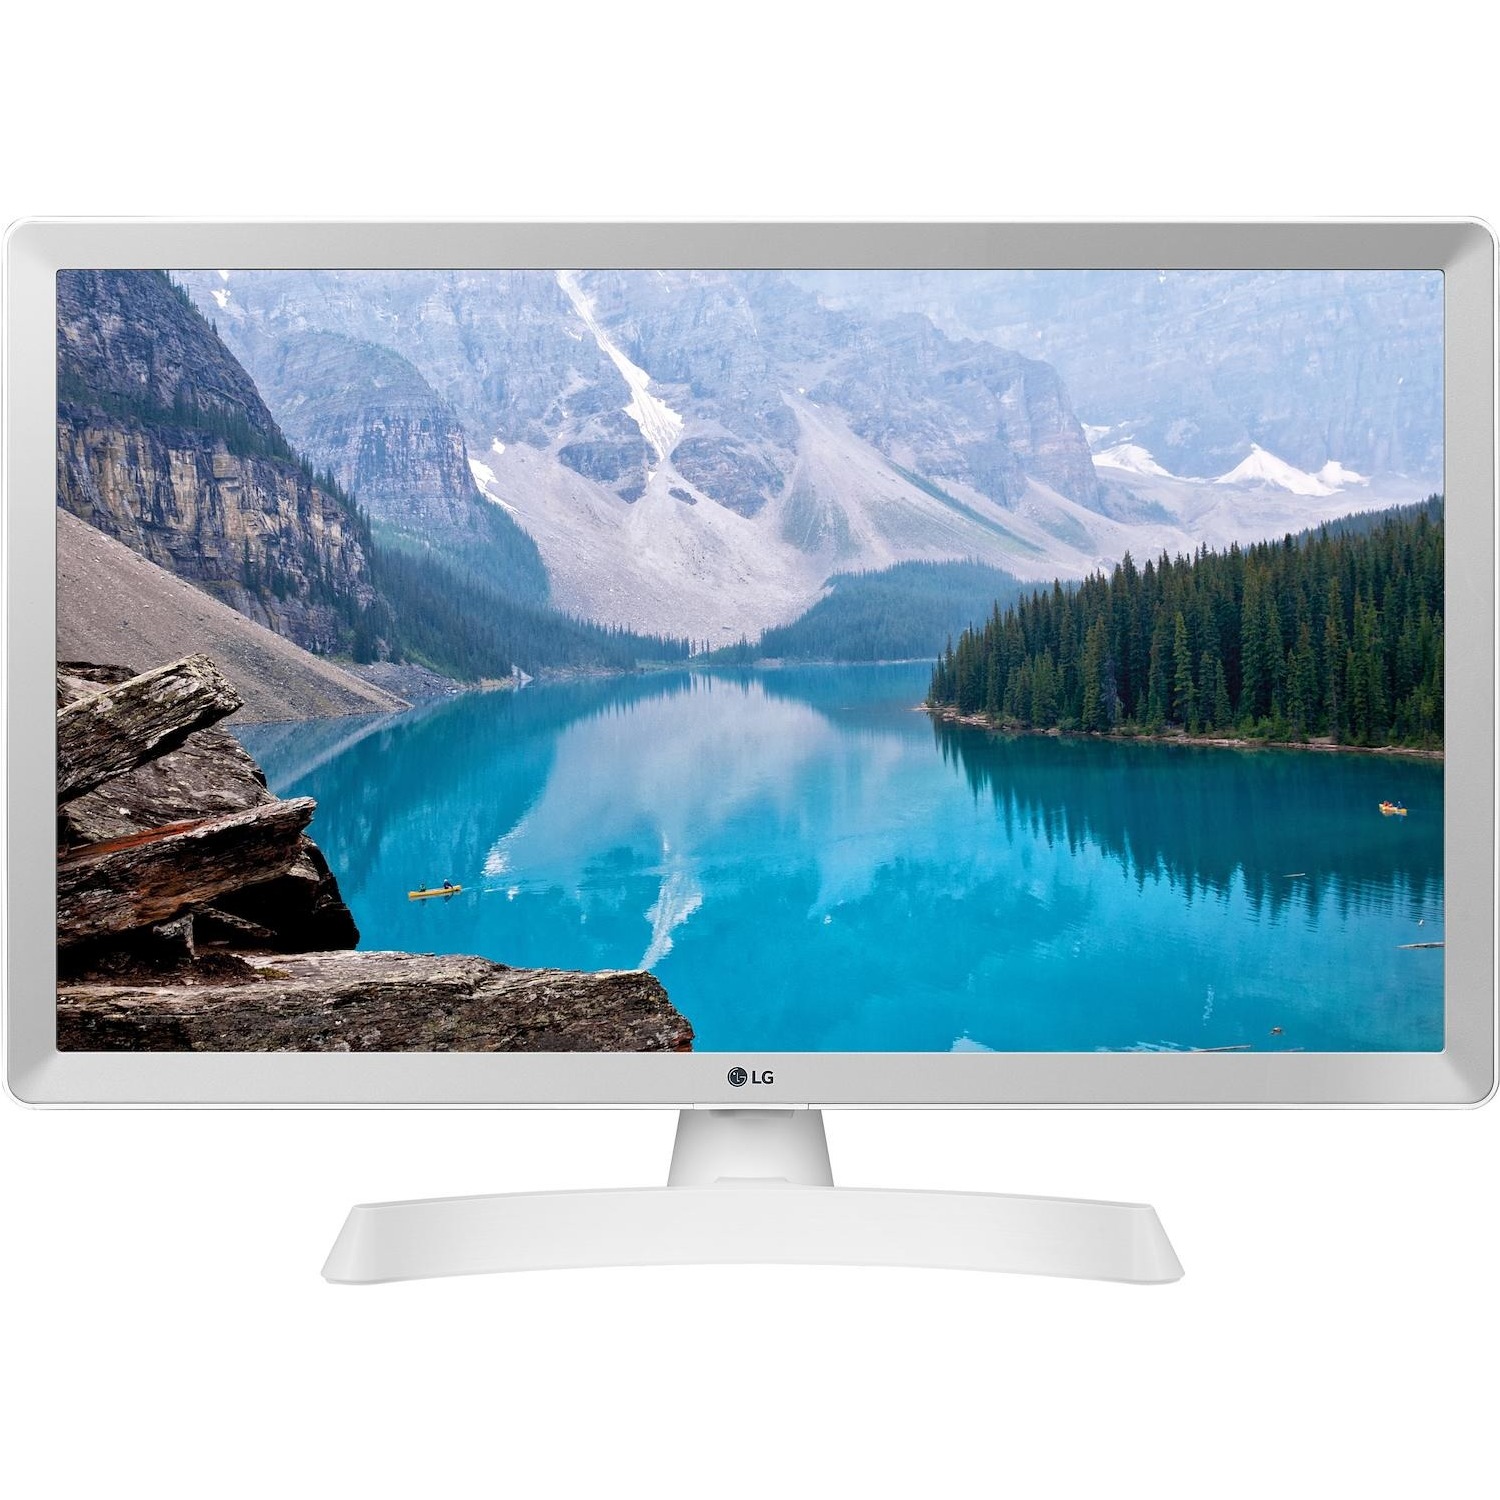 Immagine per TV LED Monitor LG 24TL510VW bianco da DIMOStore